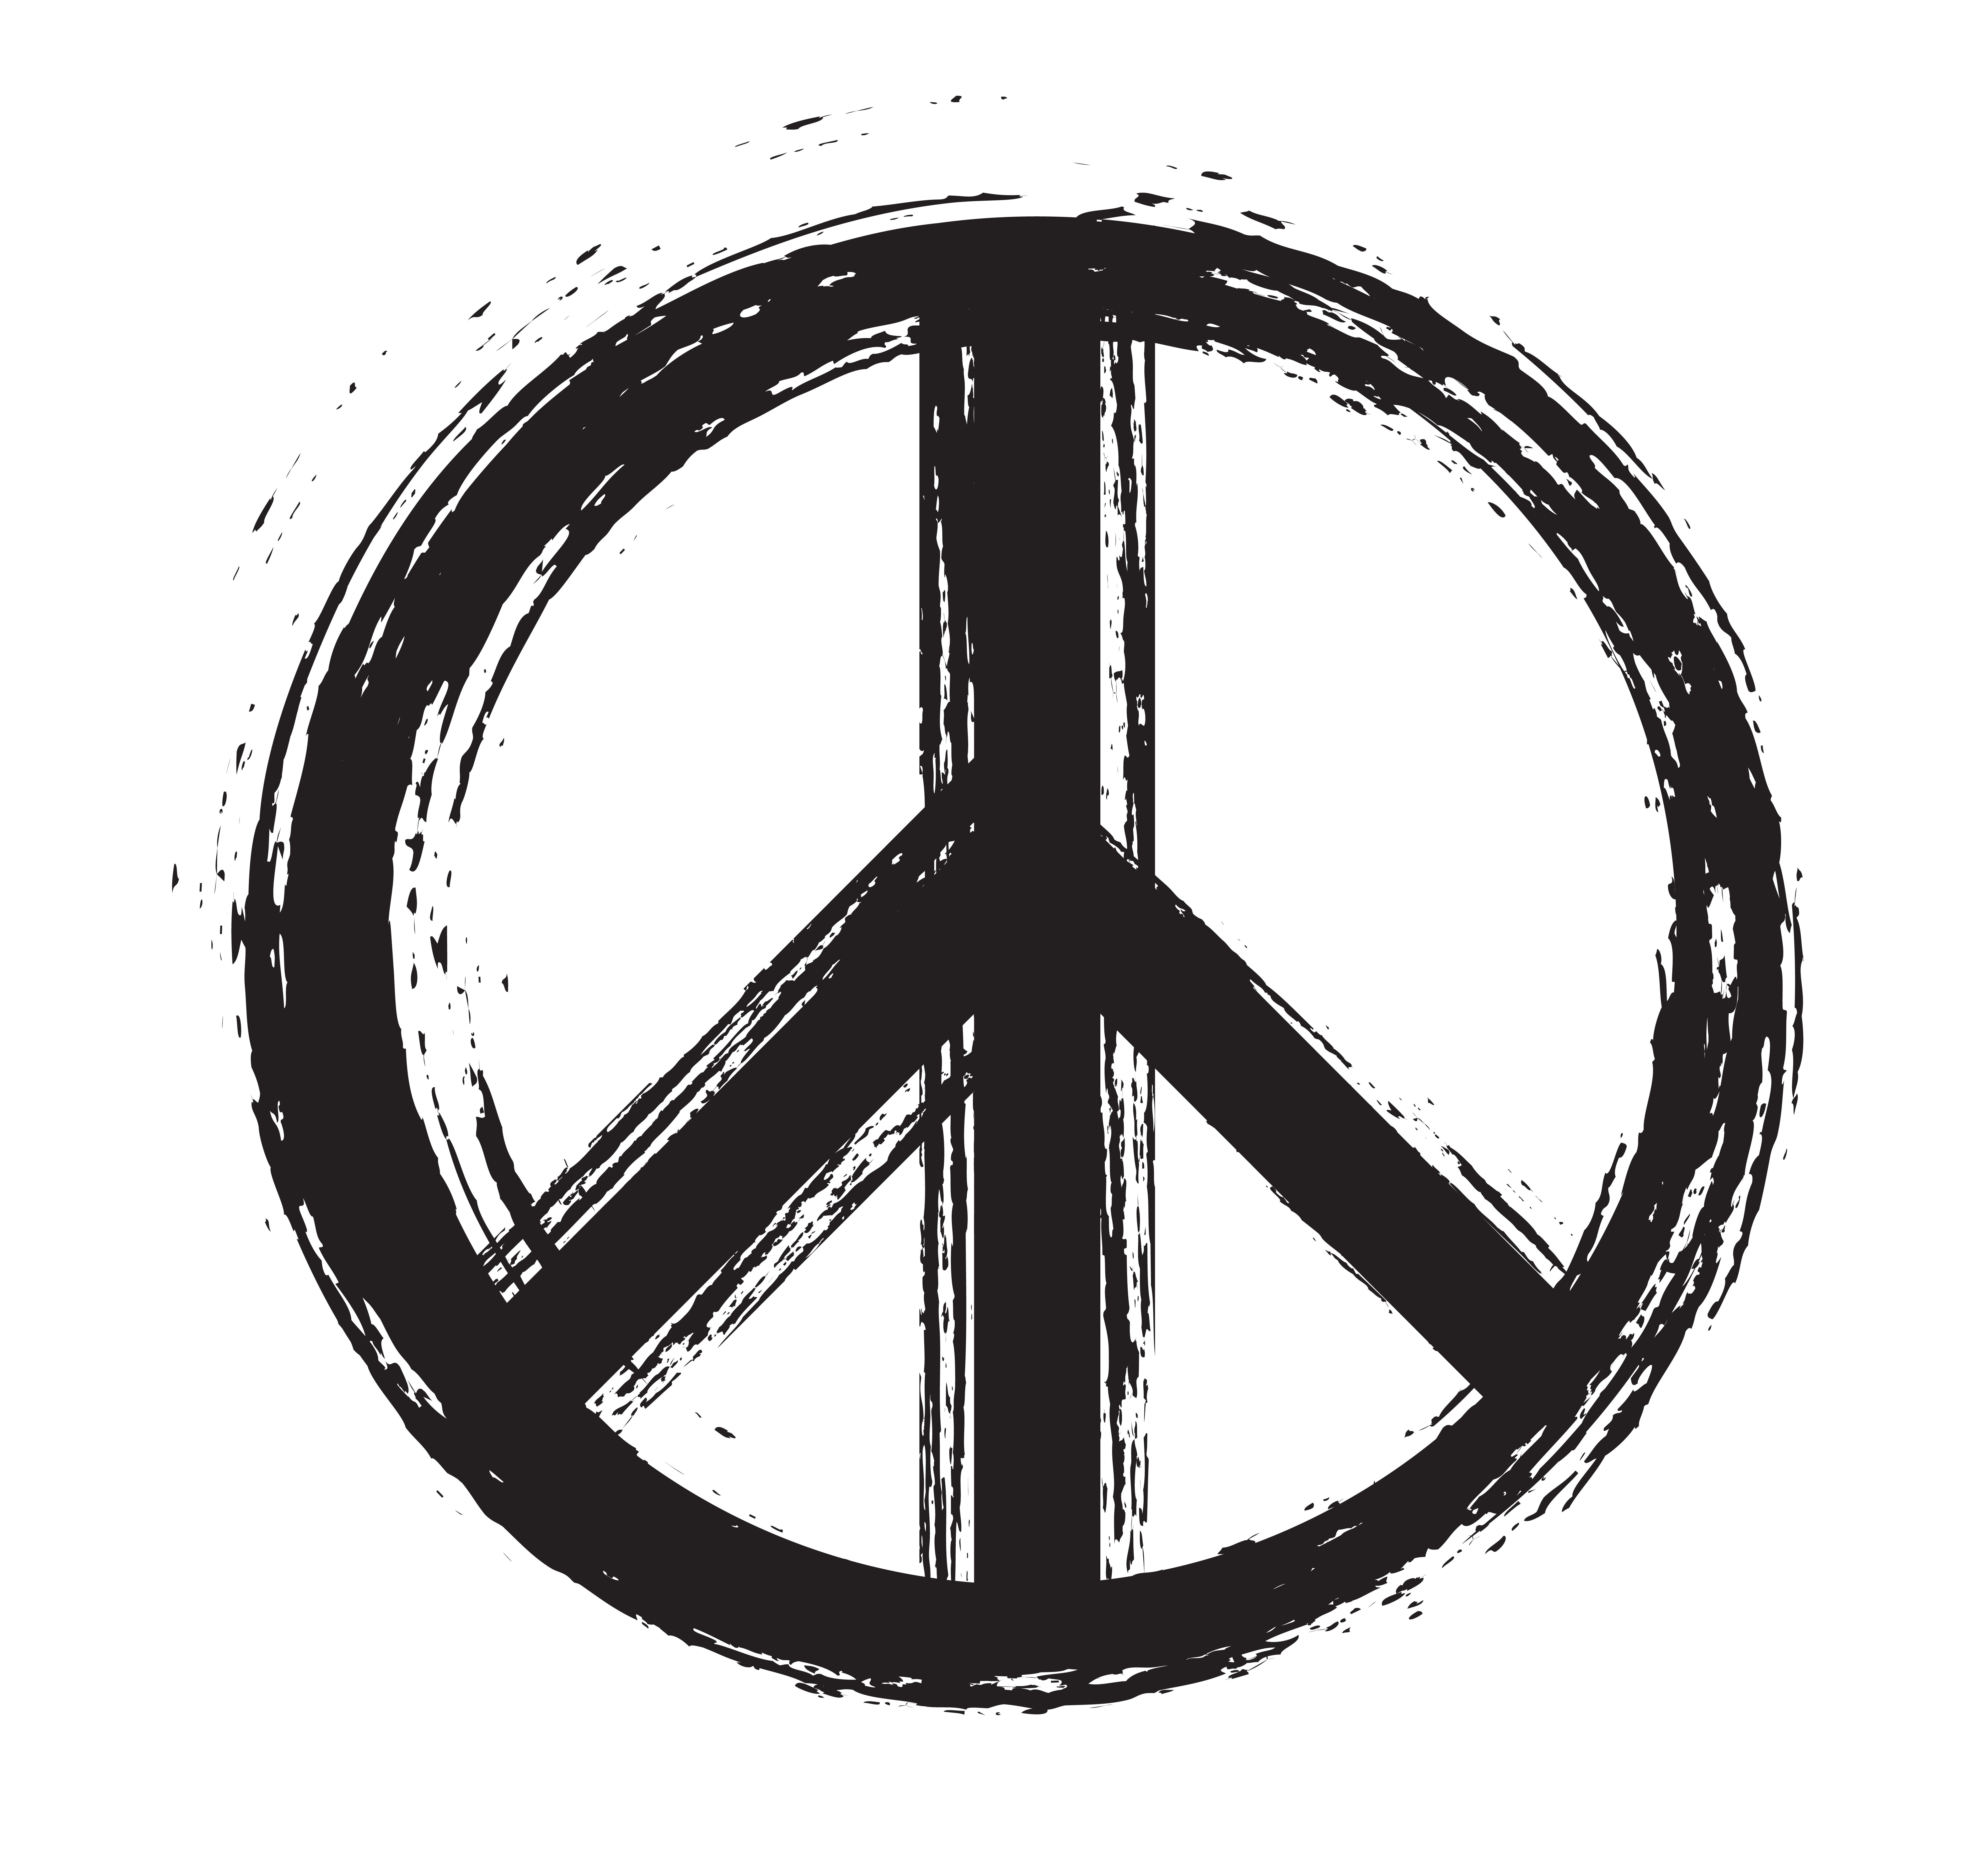 peace sign
